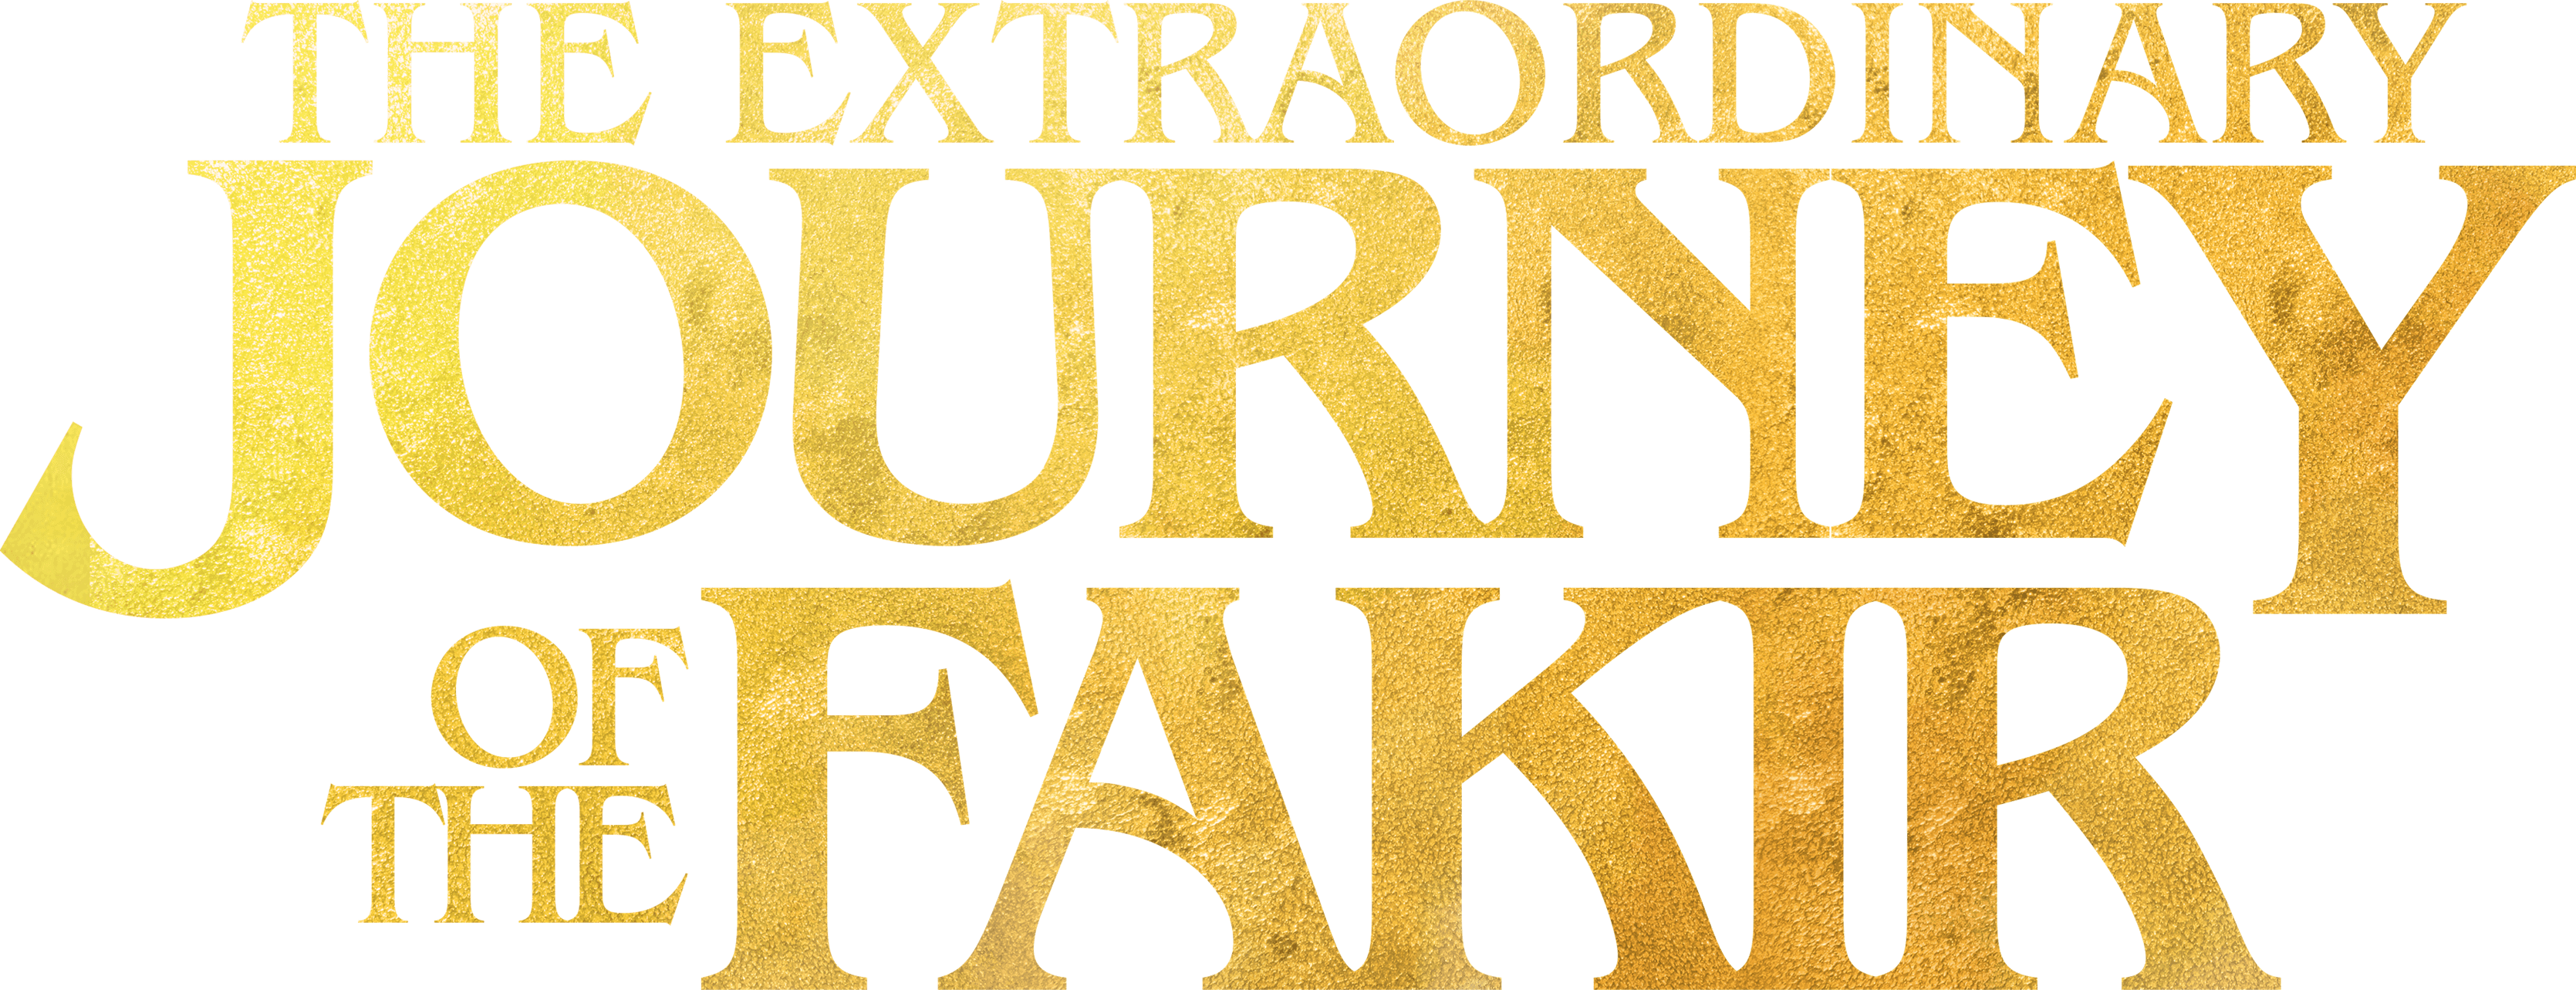 The Extraordinary Journey of the Fakir logo